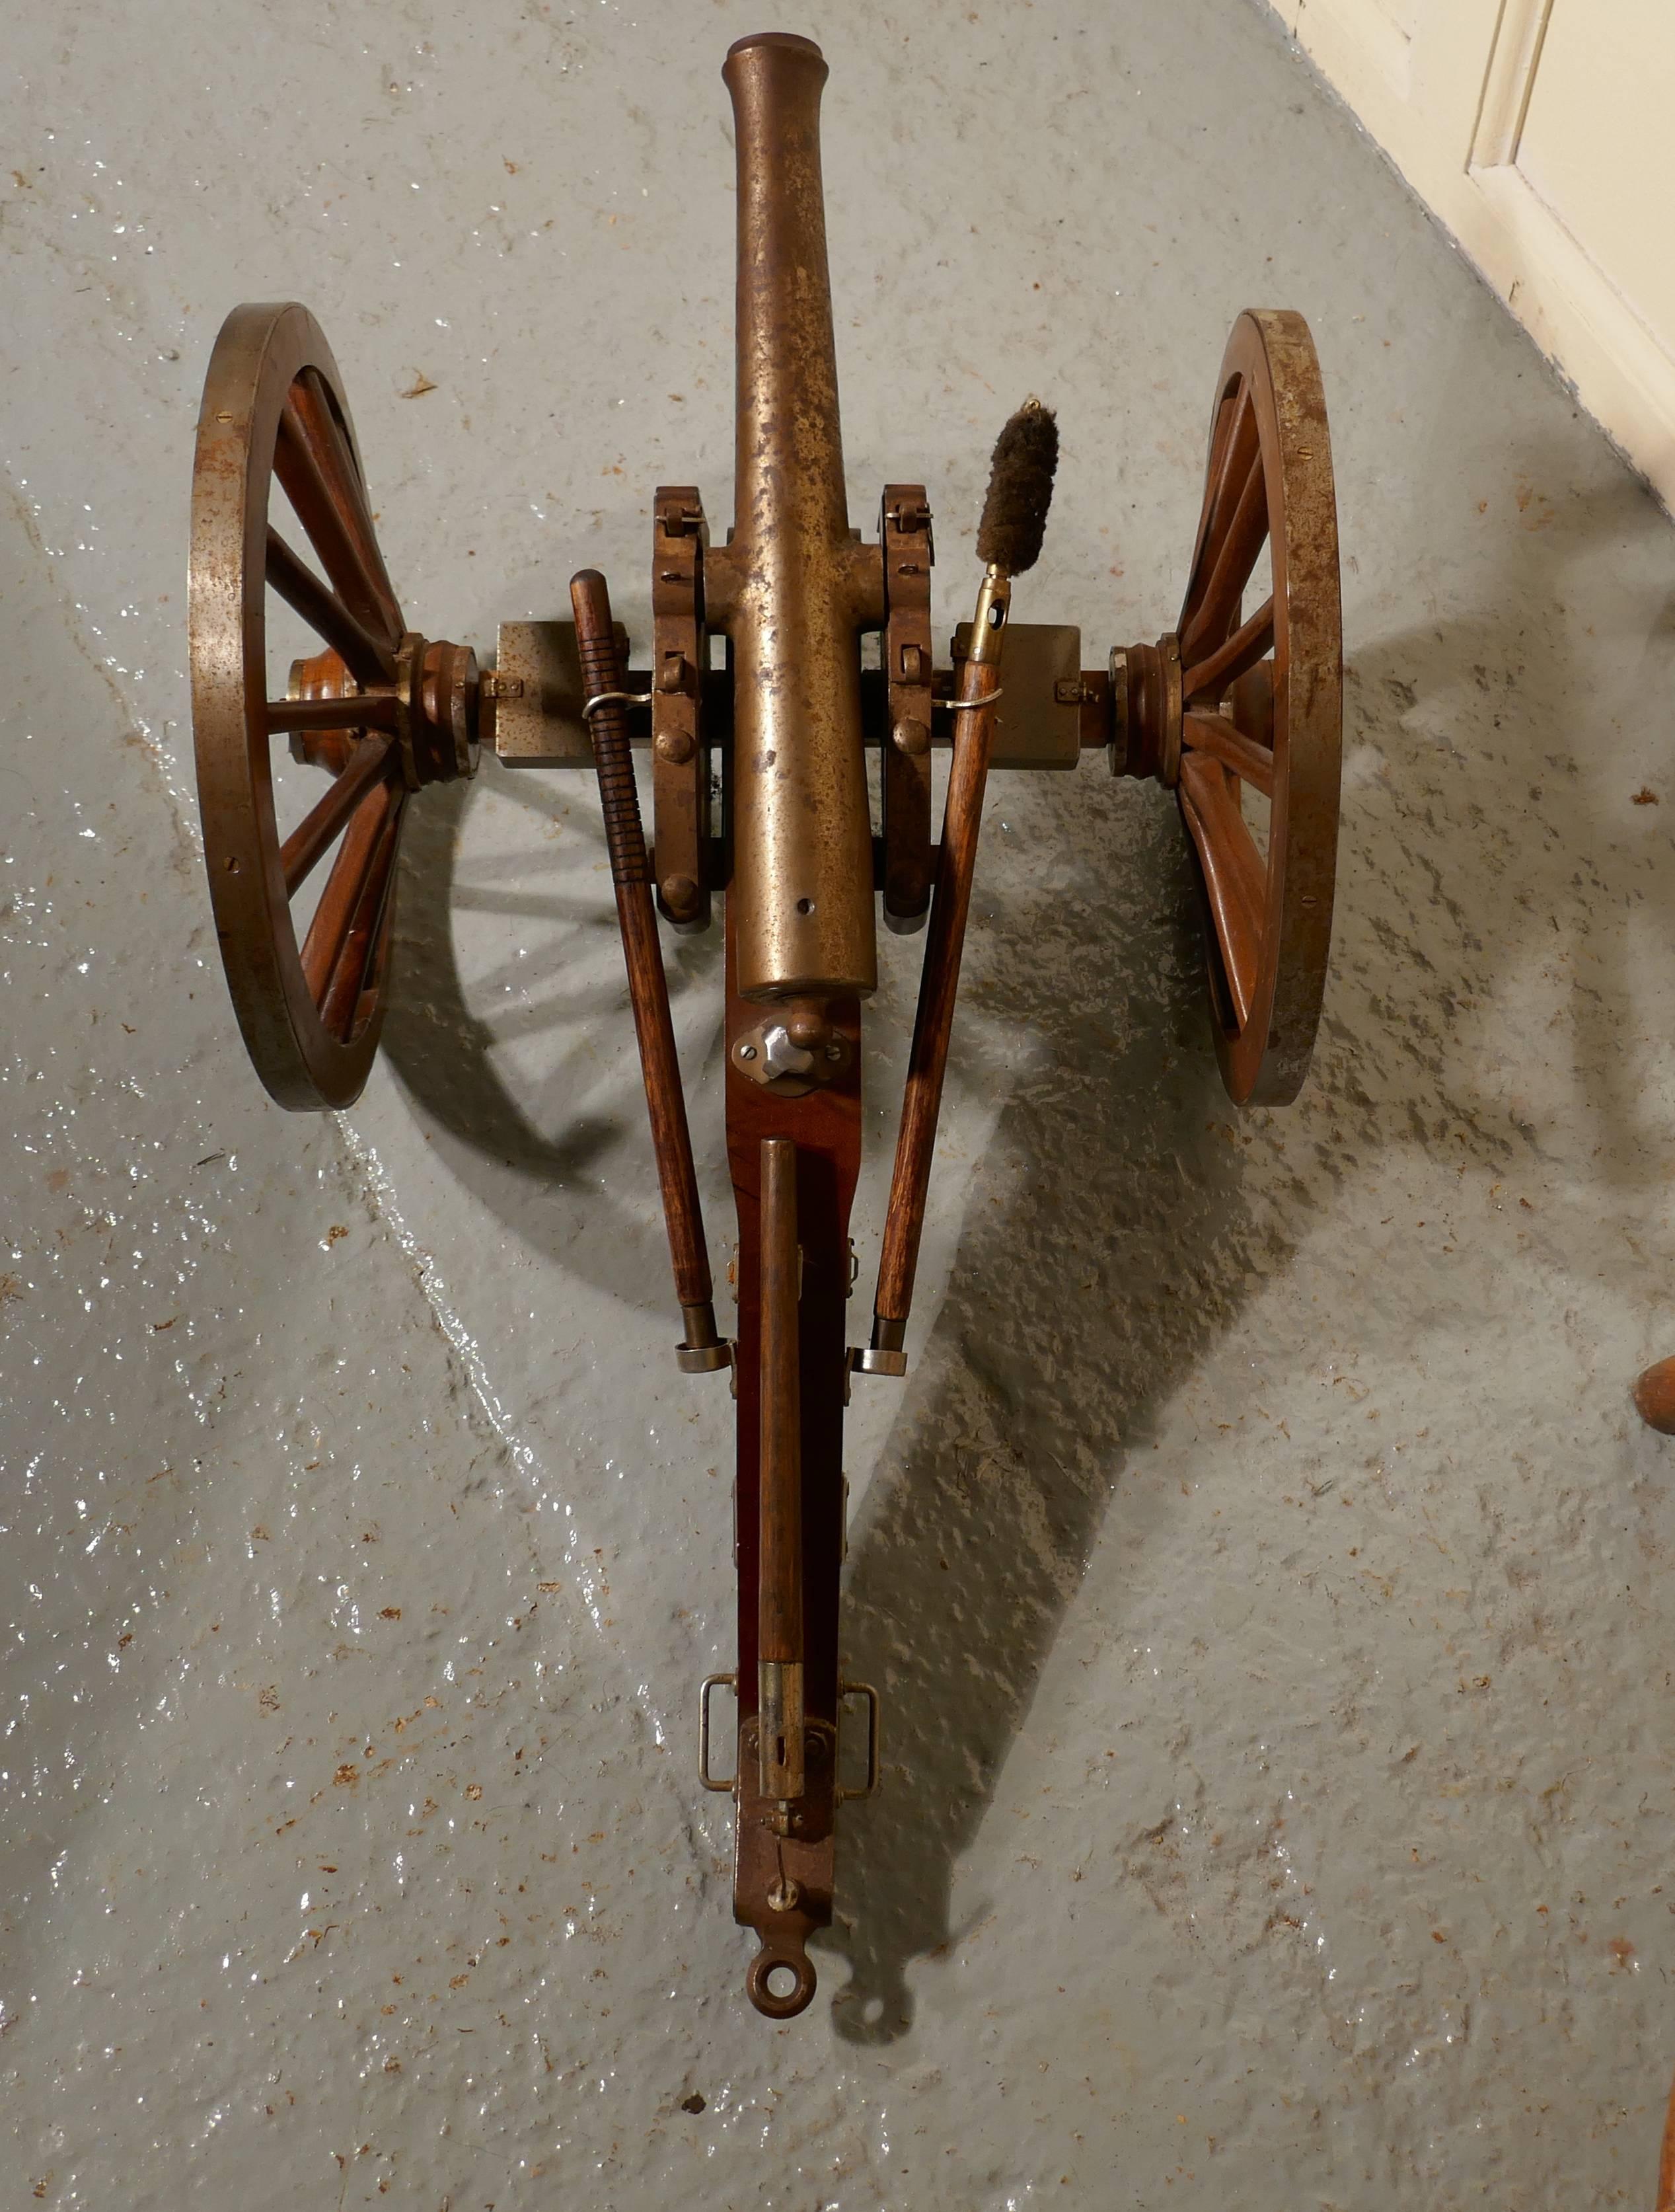 19th century cannon